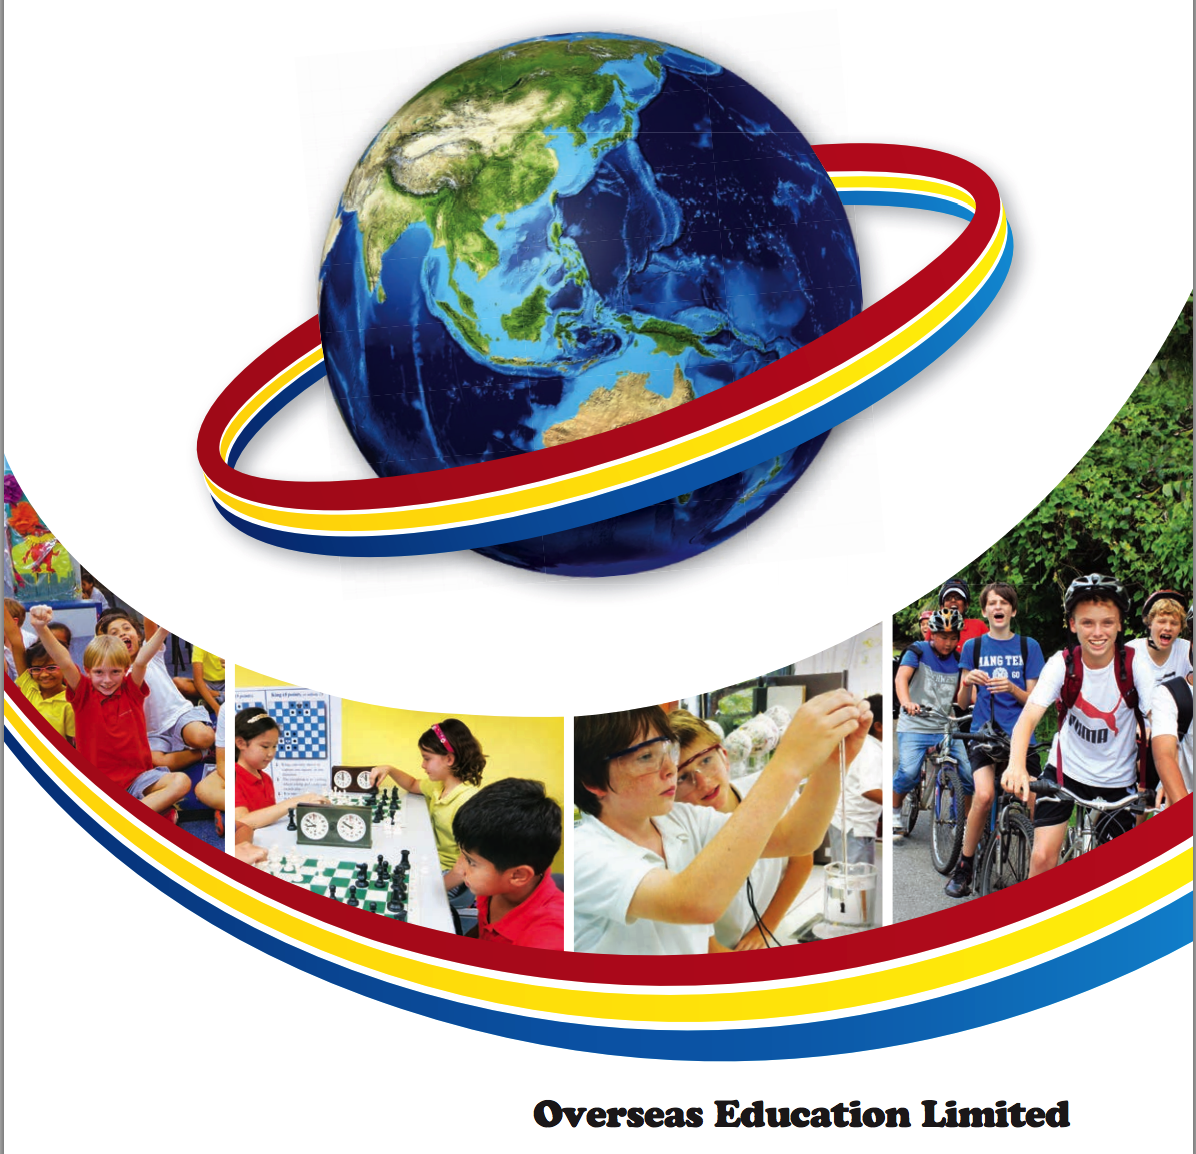 Overseas Education Ltd - CIMB Research 2016-02-17: Riding through tough times 